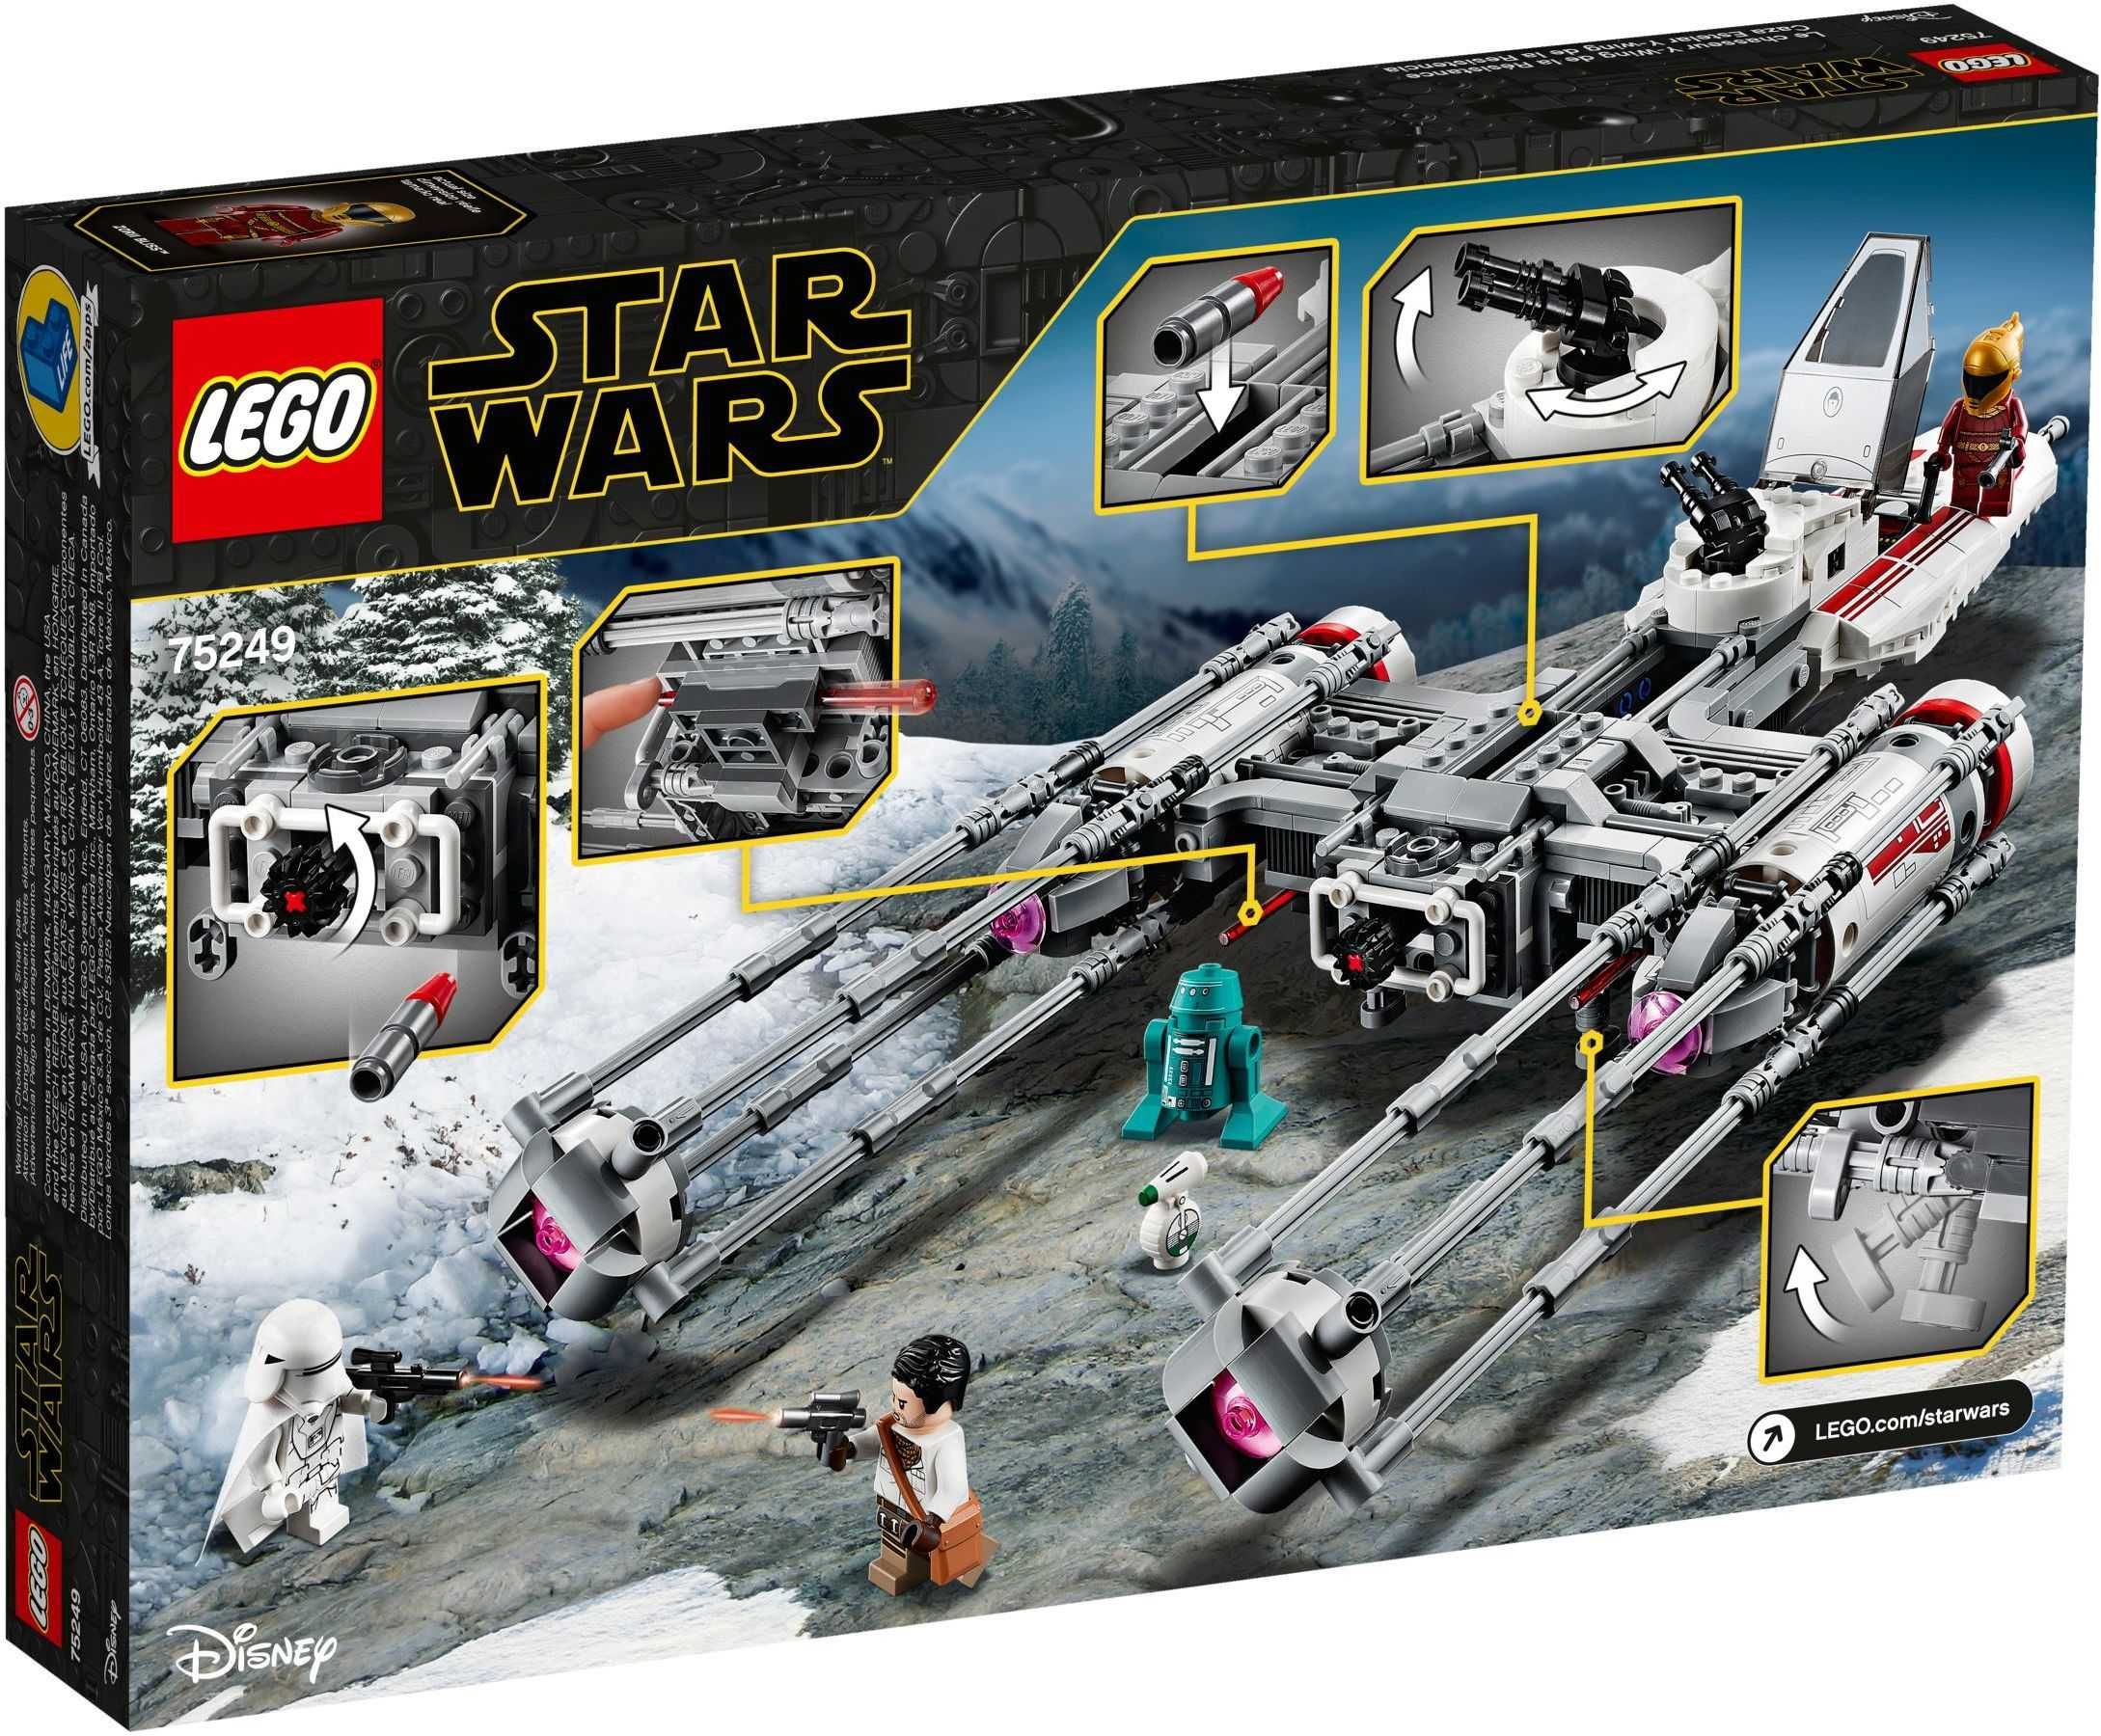 Lego Star Wars 75249 Resistance Y-wing Starfighter